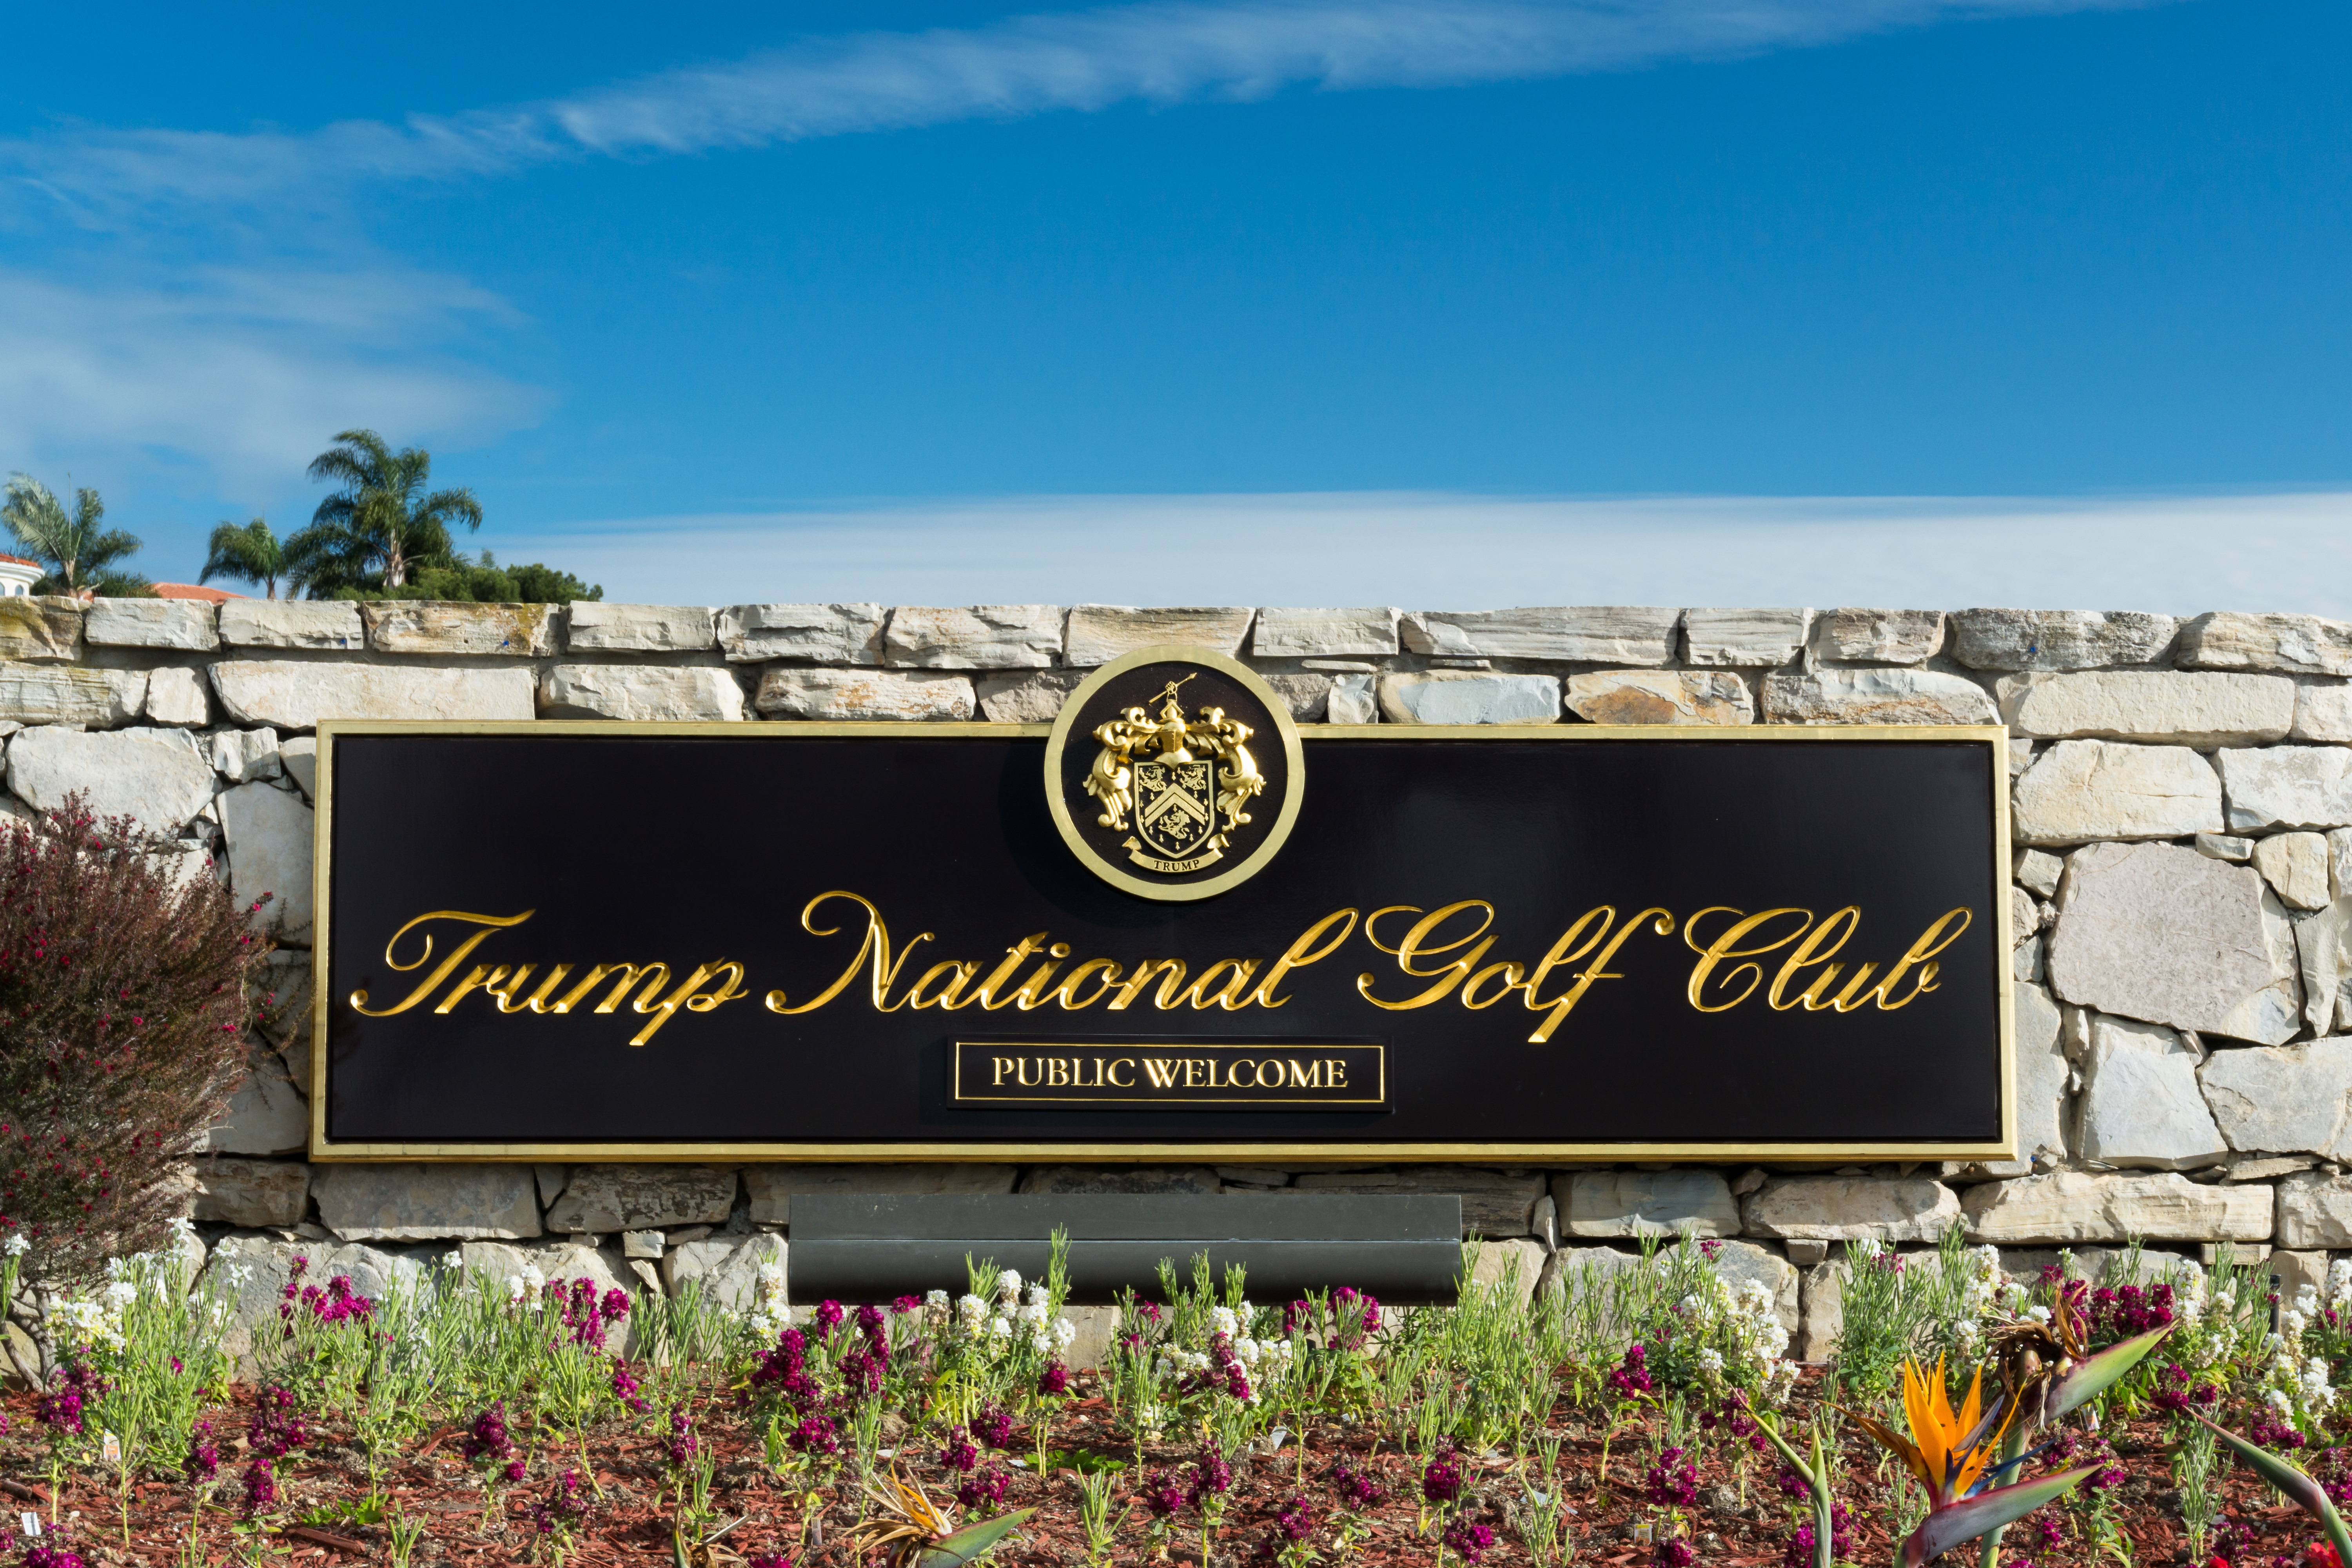 NJ Alcoholic Beverage Control Seeks to Revoke Liquor License at Trump National Golf Club – Reducing Retail Establishment Risk